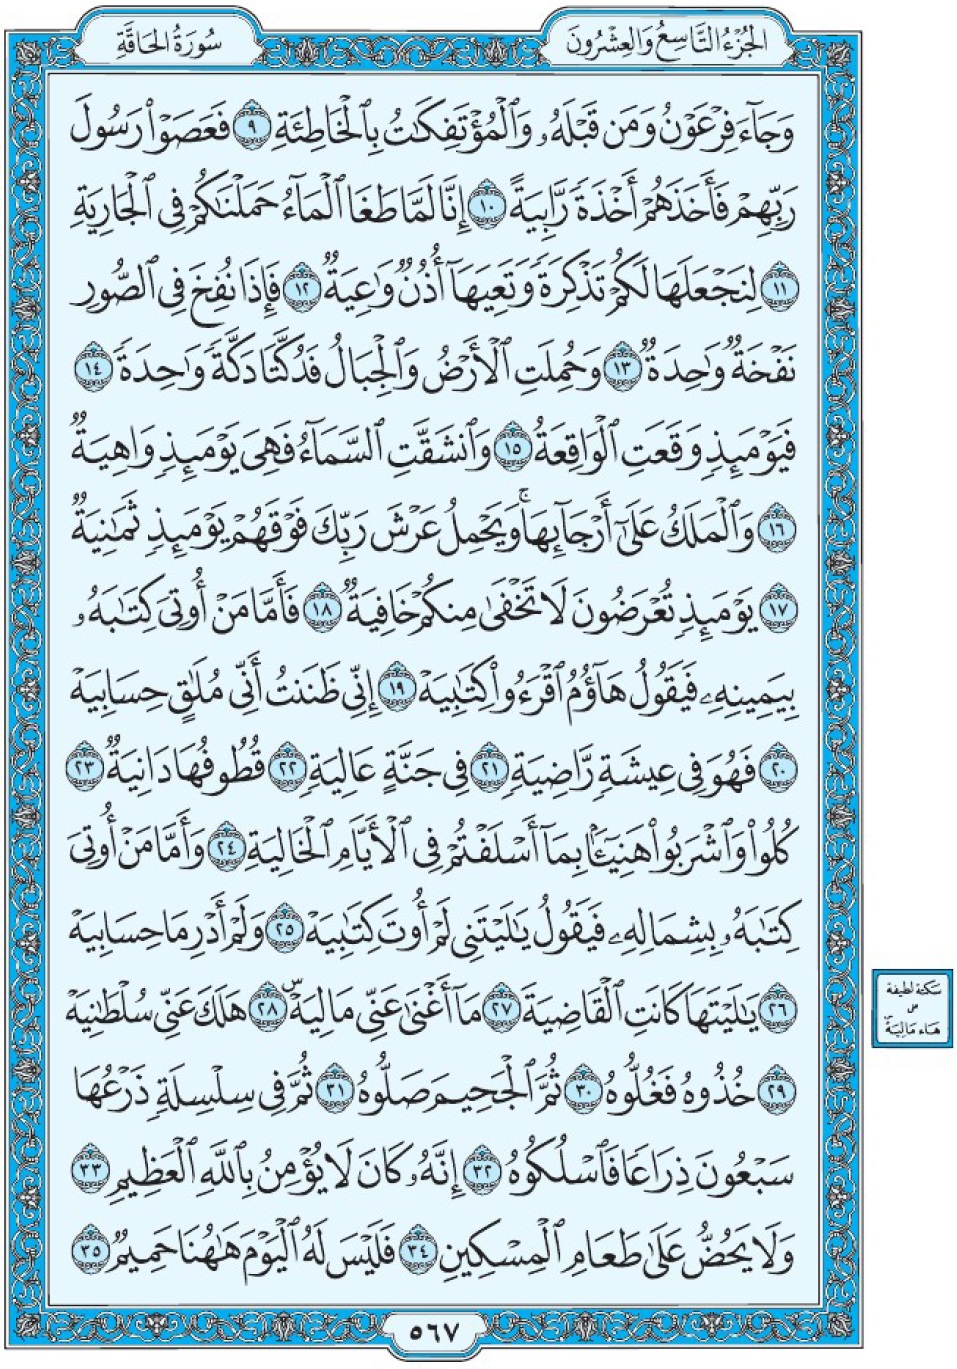 Коран Мединский мусхаф страница 567, сура аль-Хакка, аят 9-35